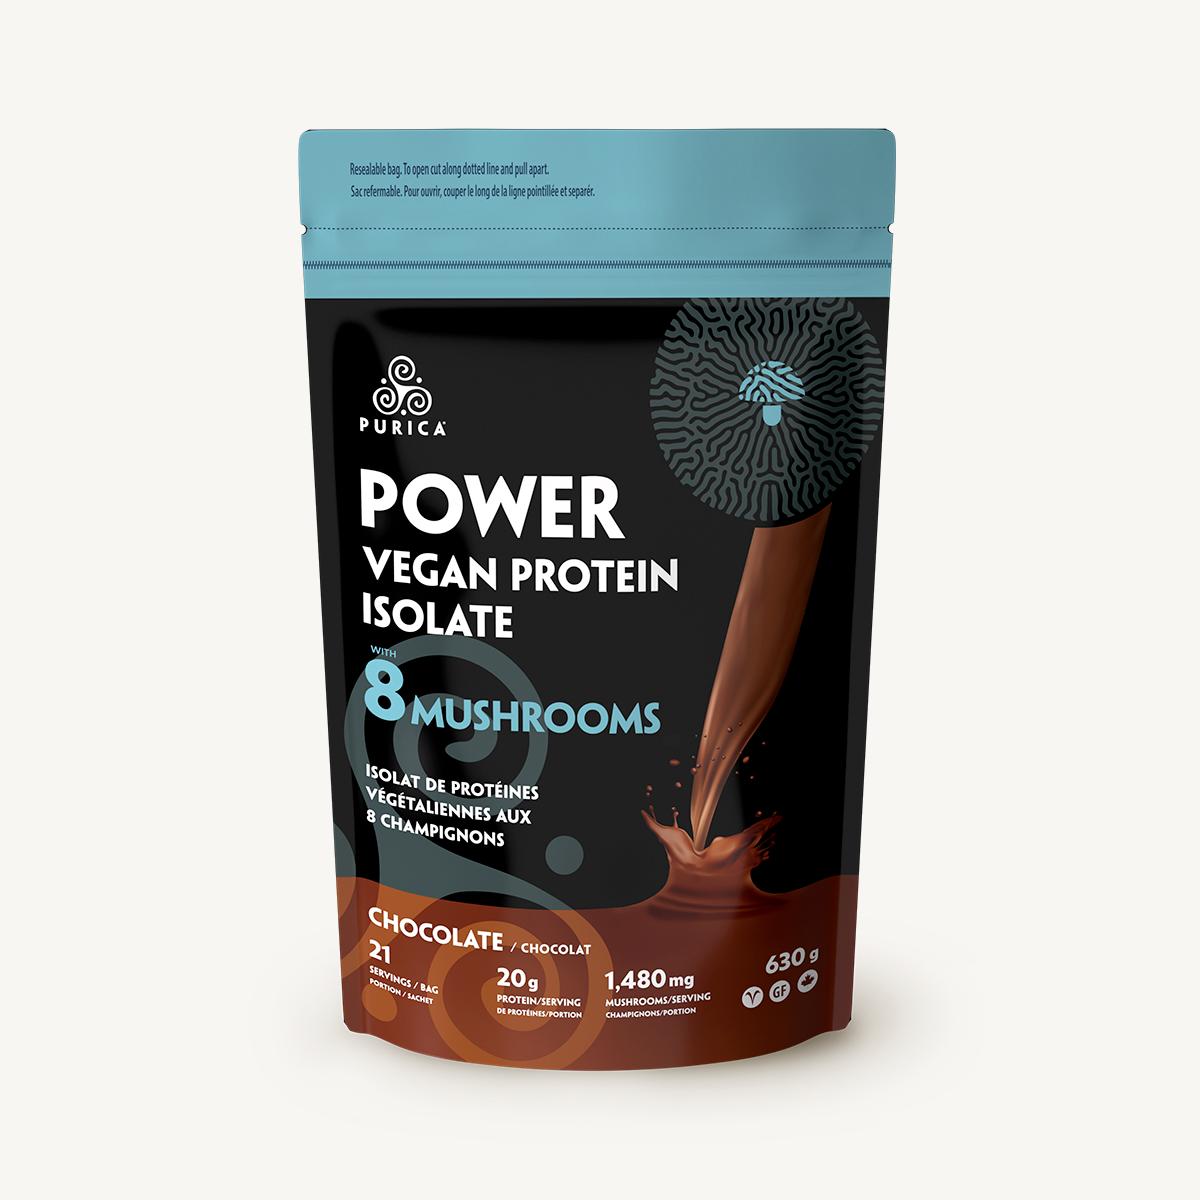 Vegan Protein with 8 Mushrooms